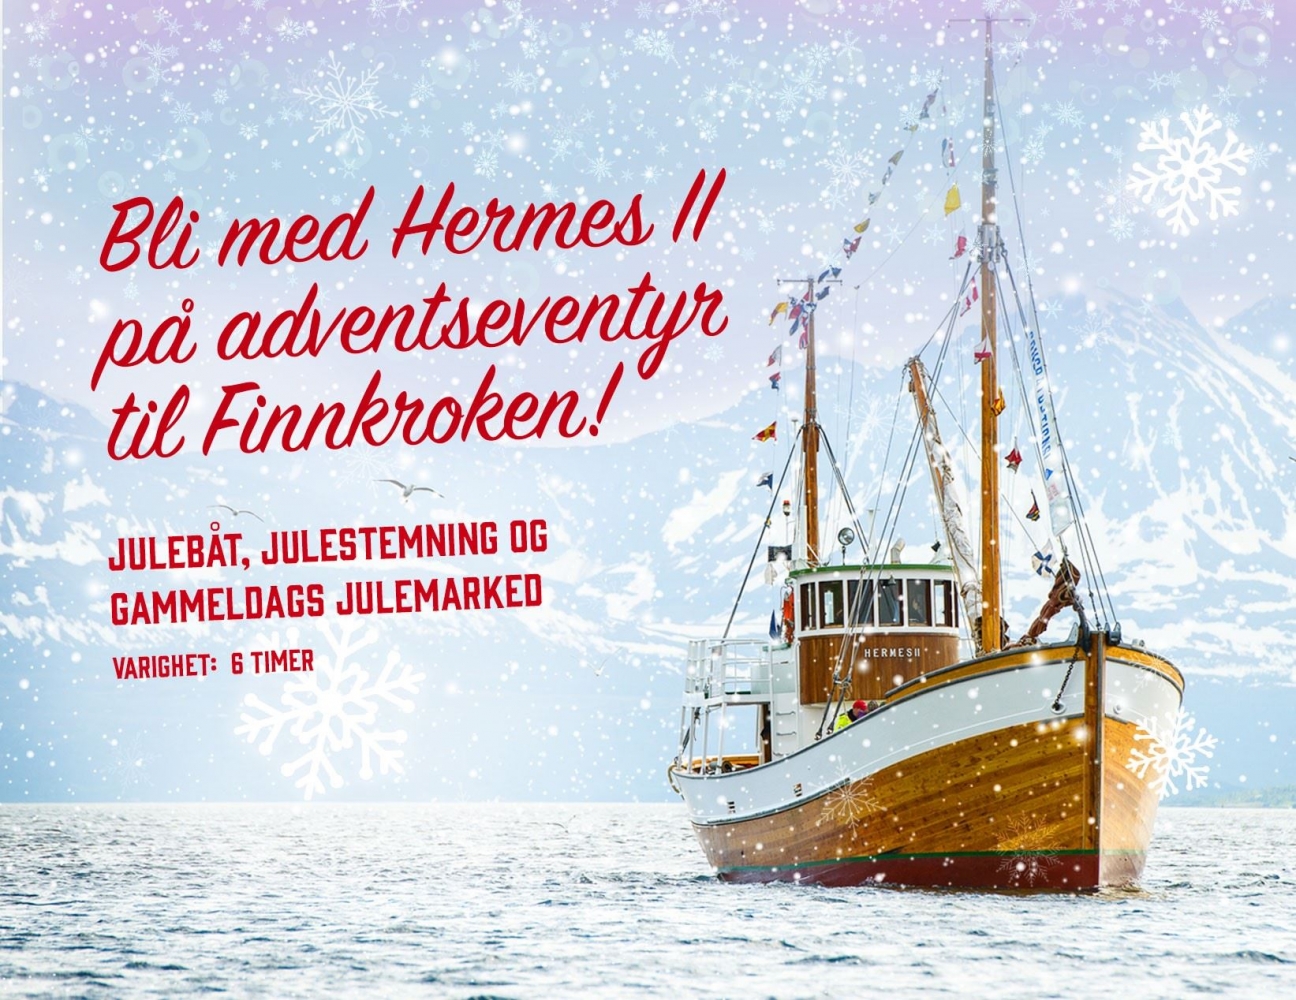 Hermes II invites to a pre christmas cruise to Finnkroken